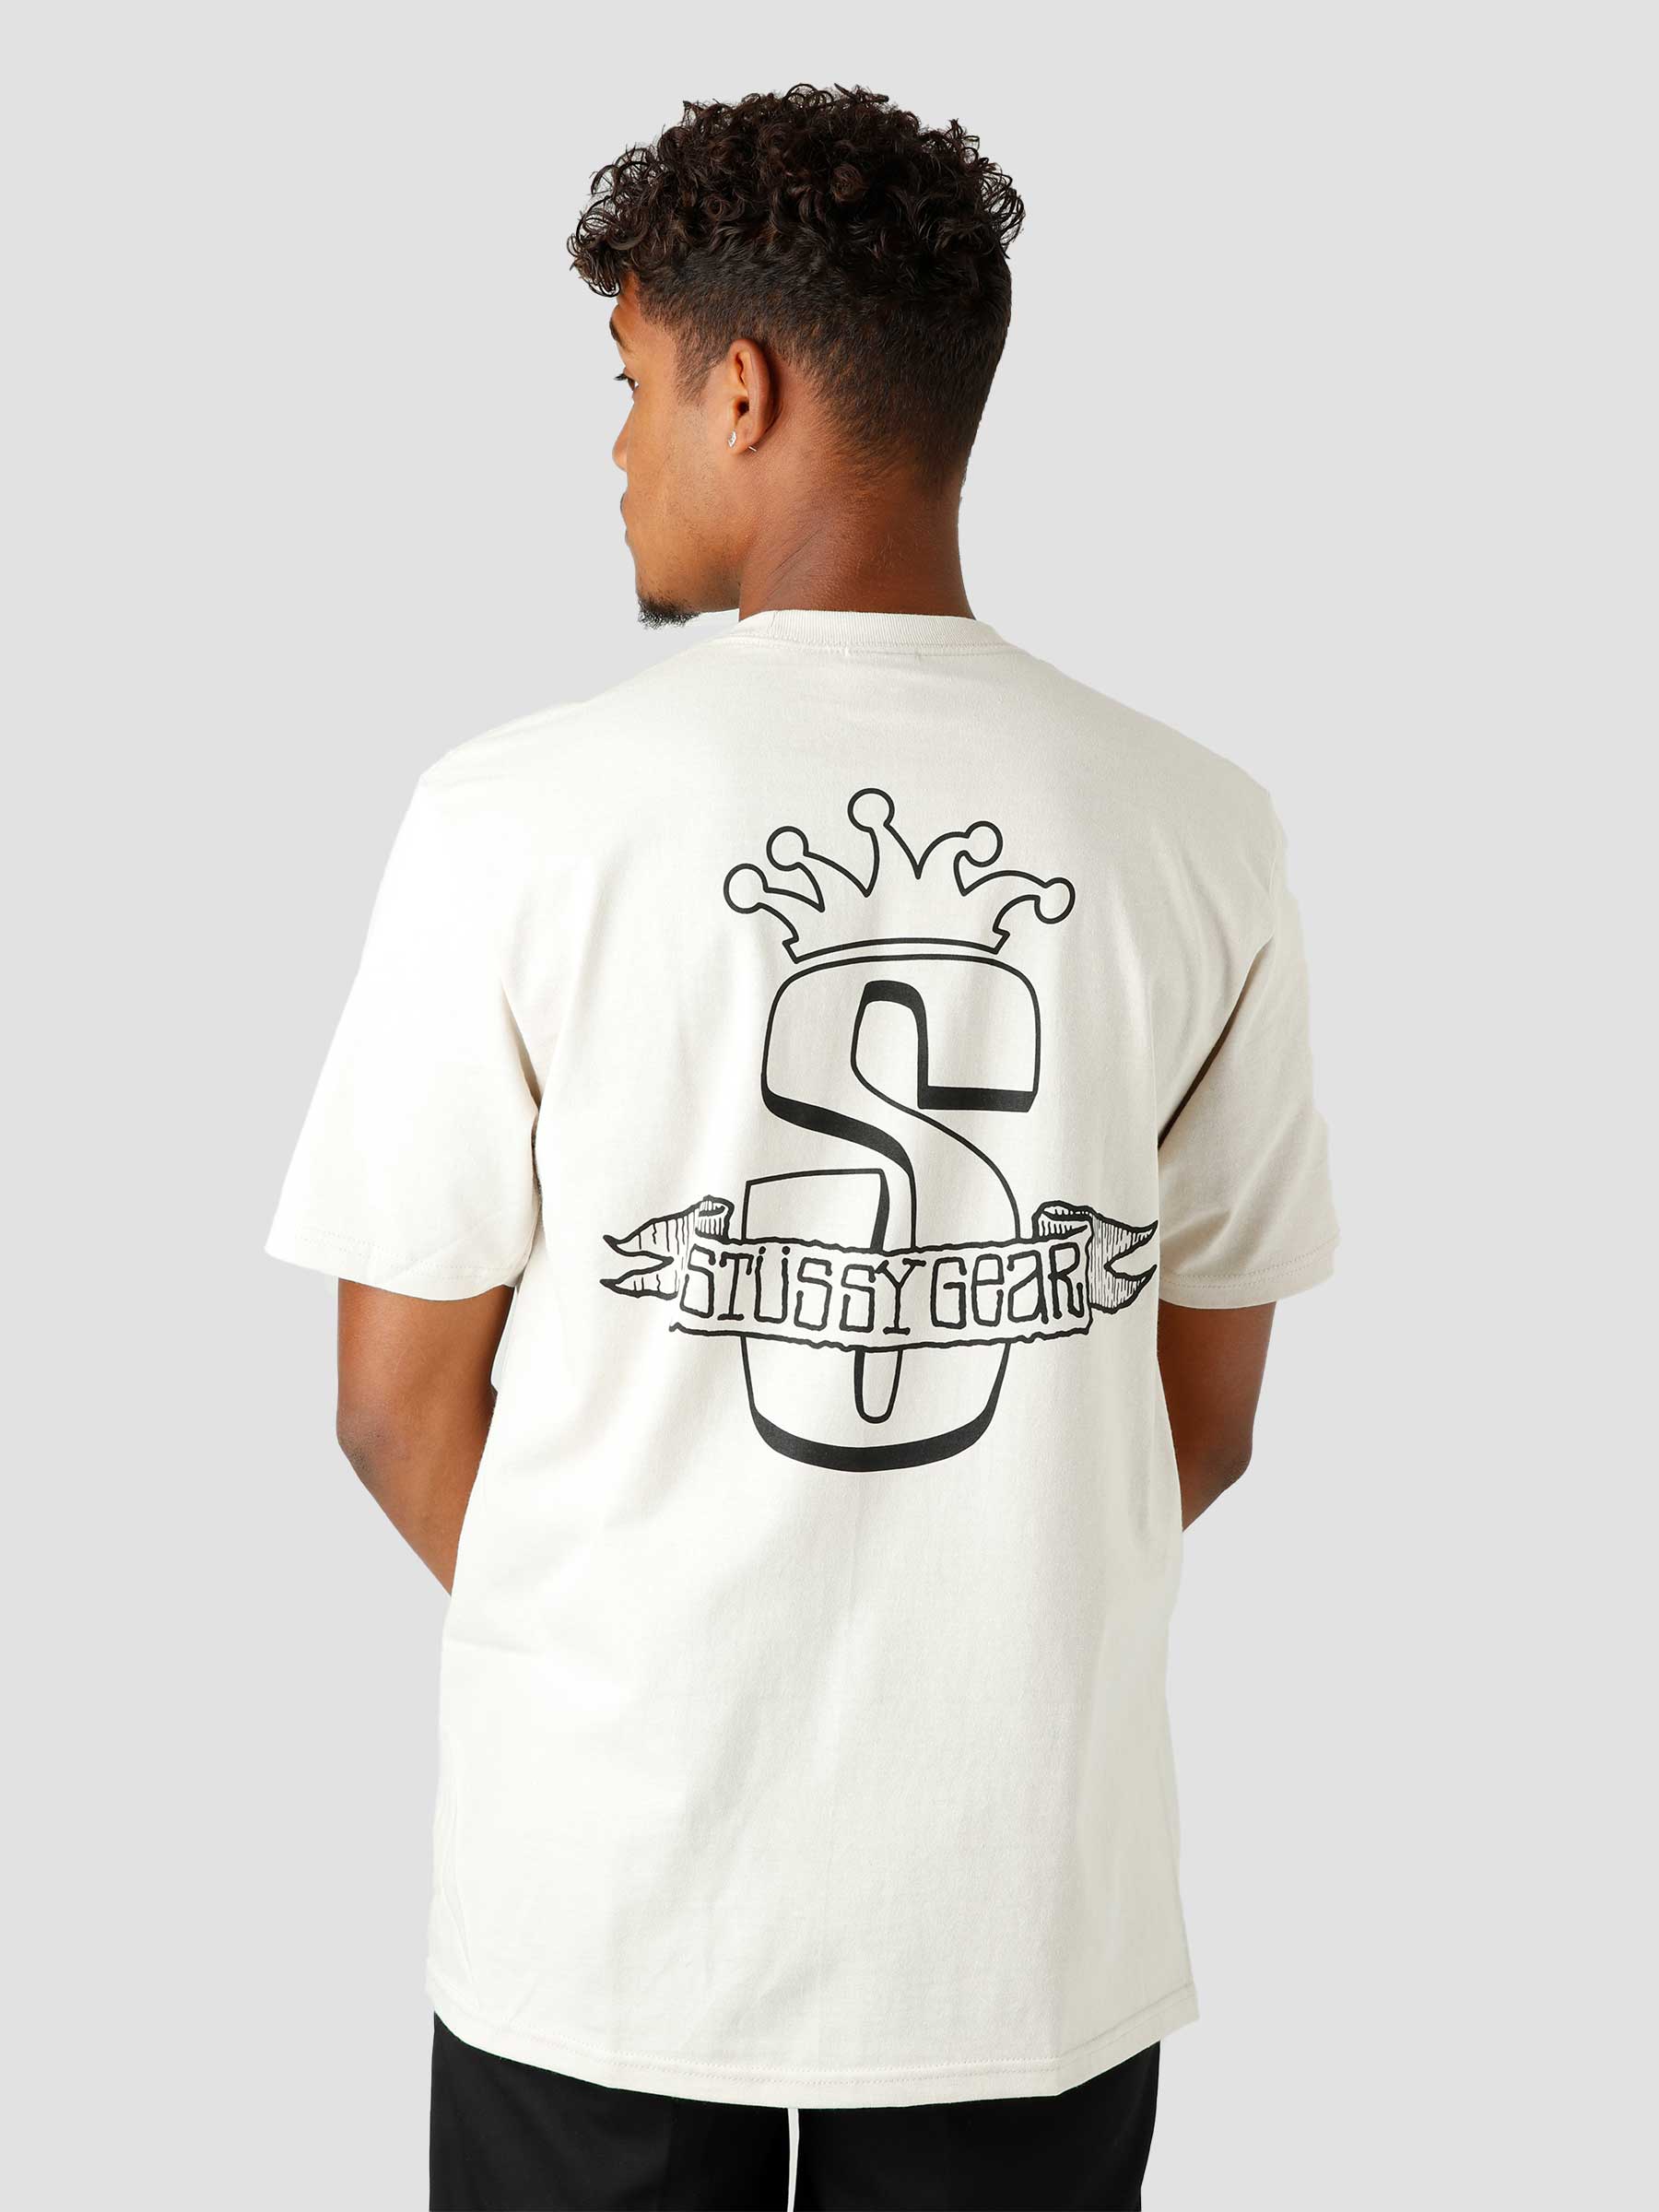 stussy gear banner tee - Tシャツ/カットソー(半袖/袖なし)